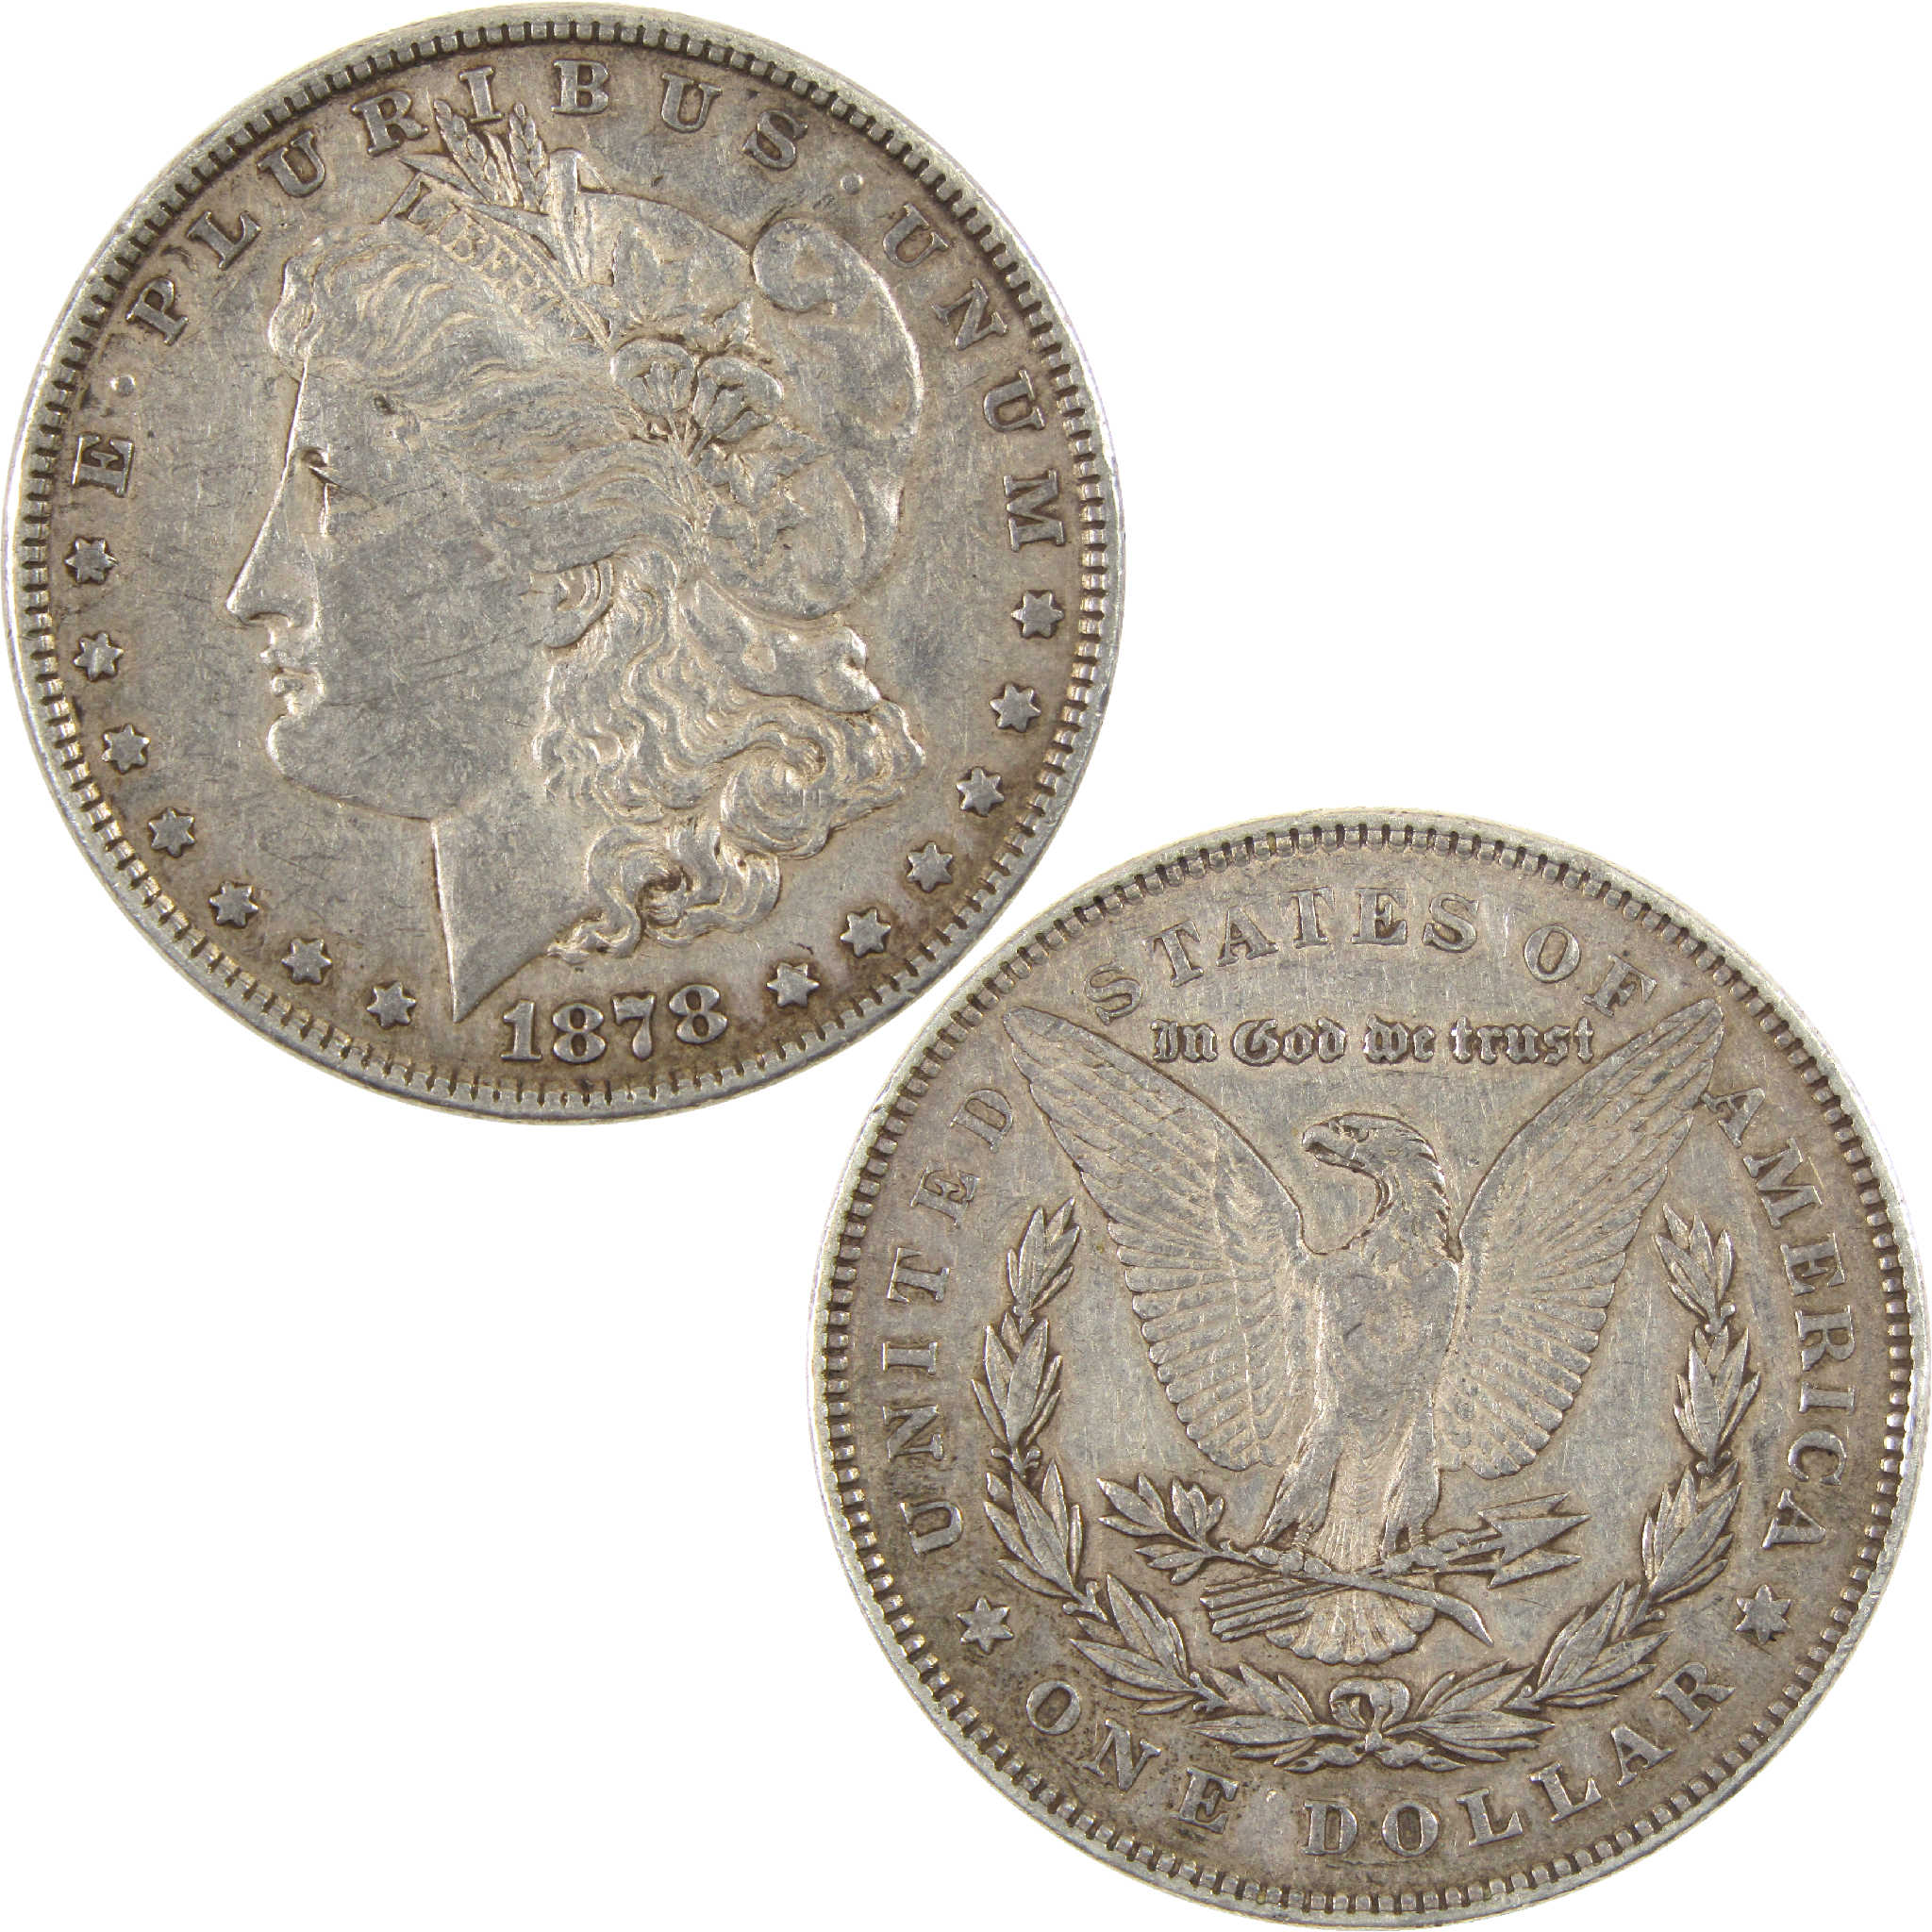 1878 7TF Rev 78 Morgan Dollar VF Very Fine Silver $1 Coin SKU:I11528 - Morgan coin - Morgan silver dollar - Morgan silver dollar for sale - Profile Coins &amp; Collectibles